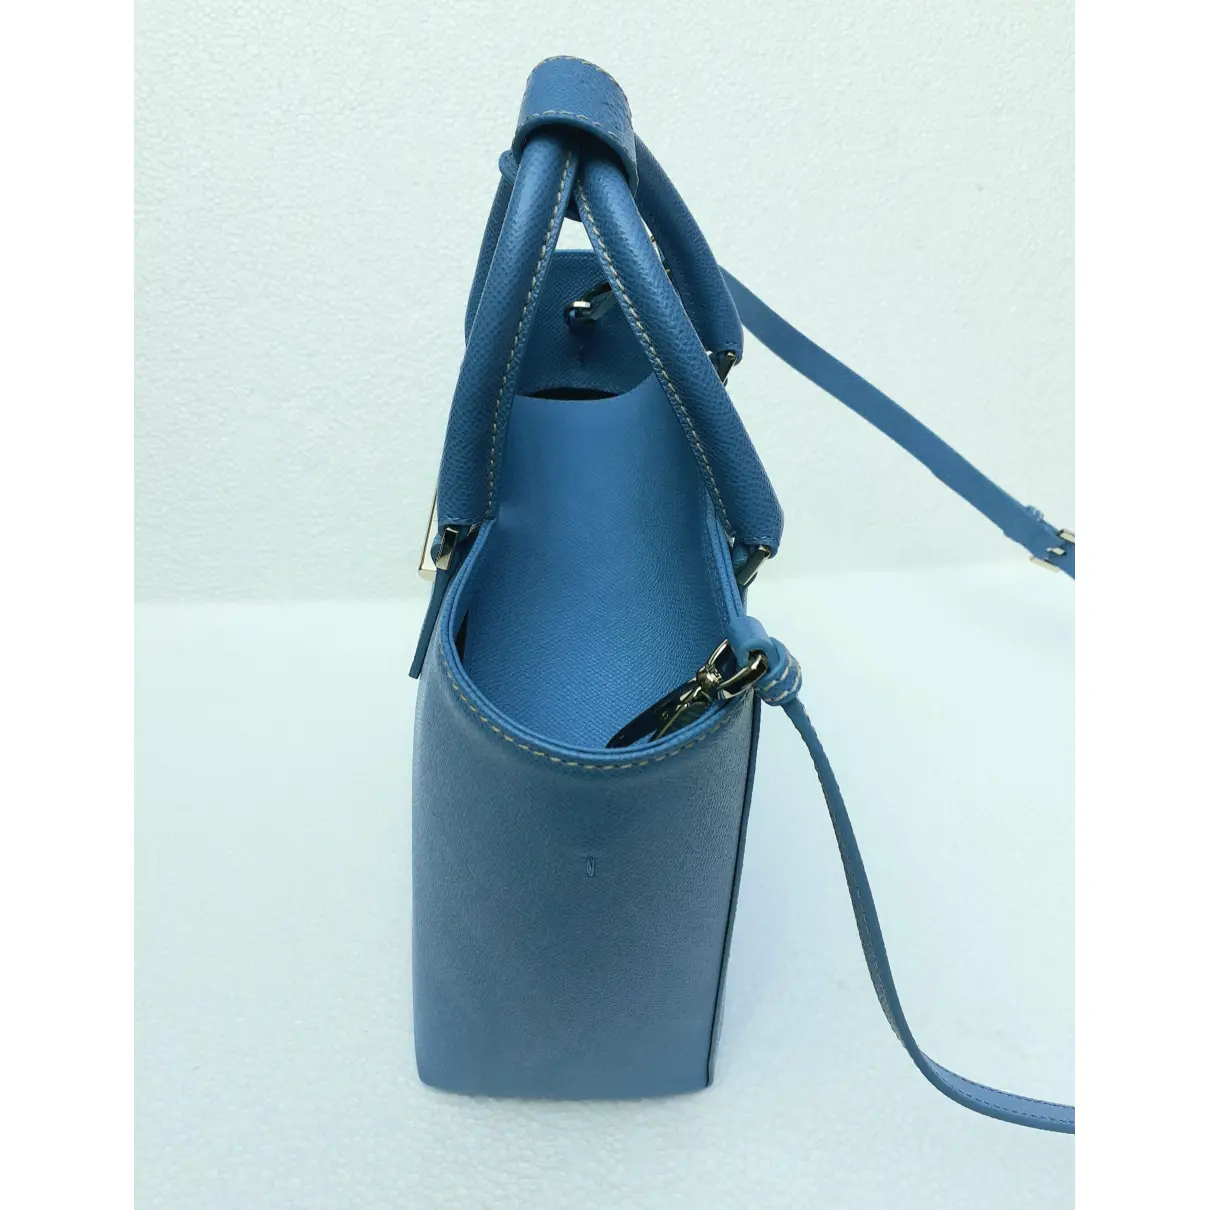 Buy Gianfranco Lotti Leather handbag online